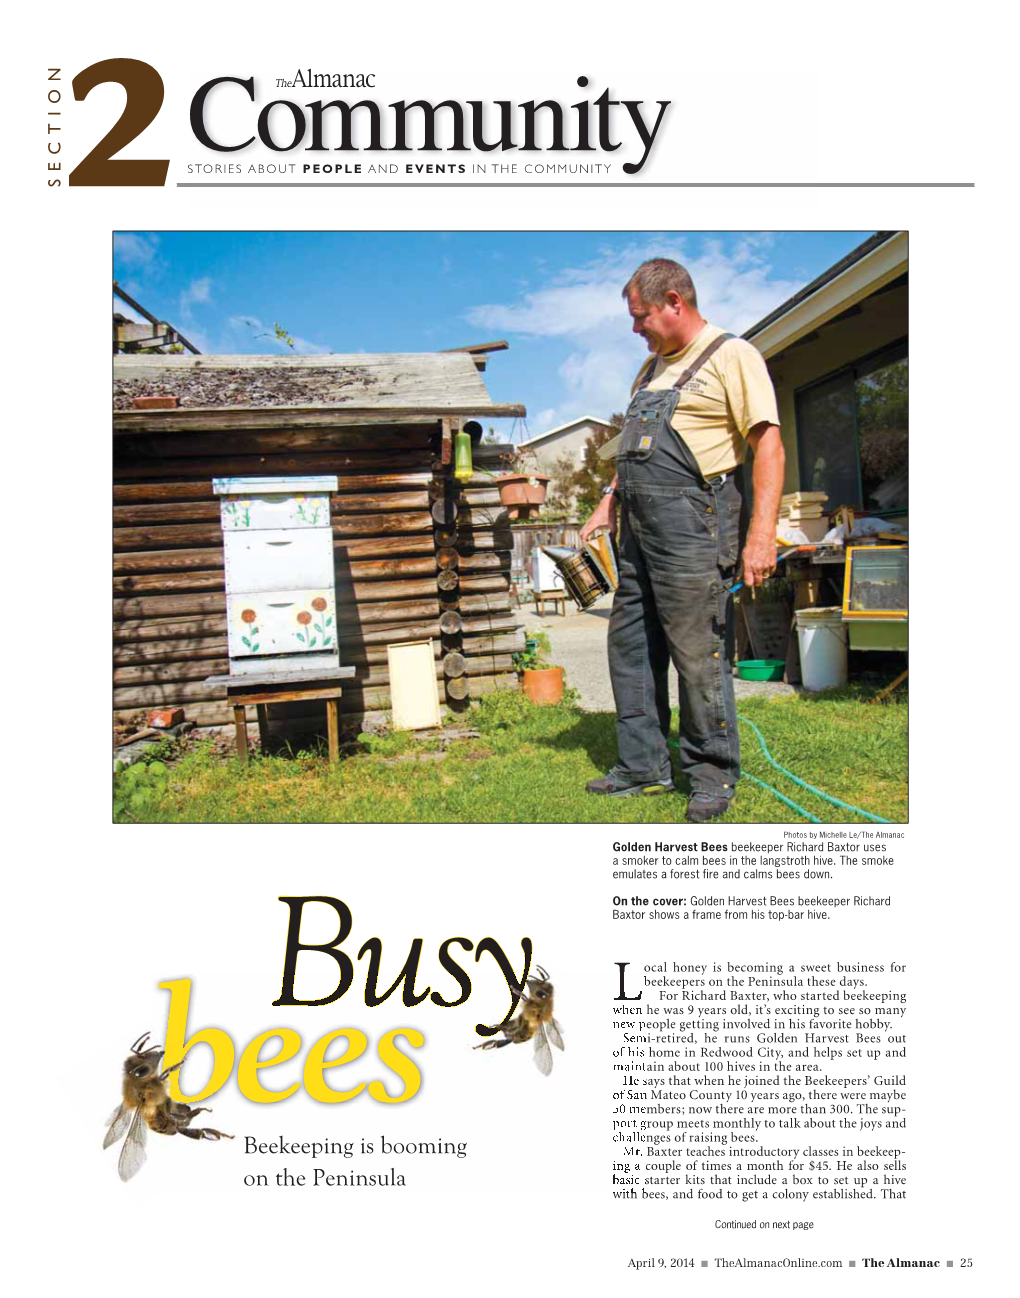 Beekeeping Is Booming on the Peninsula